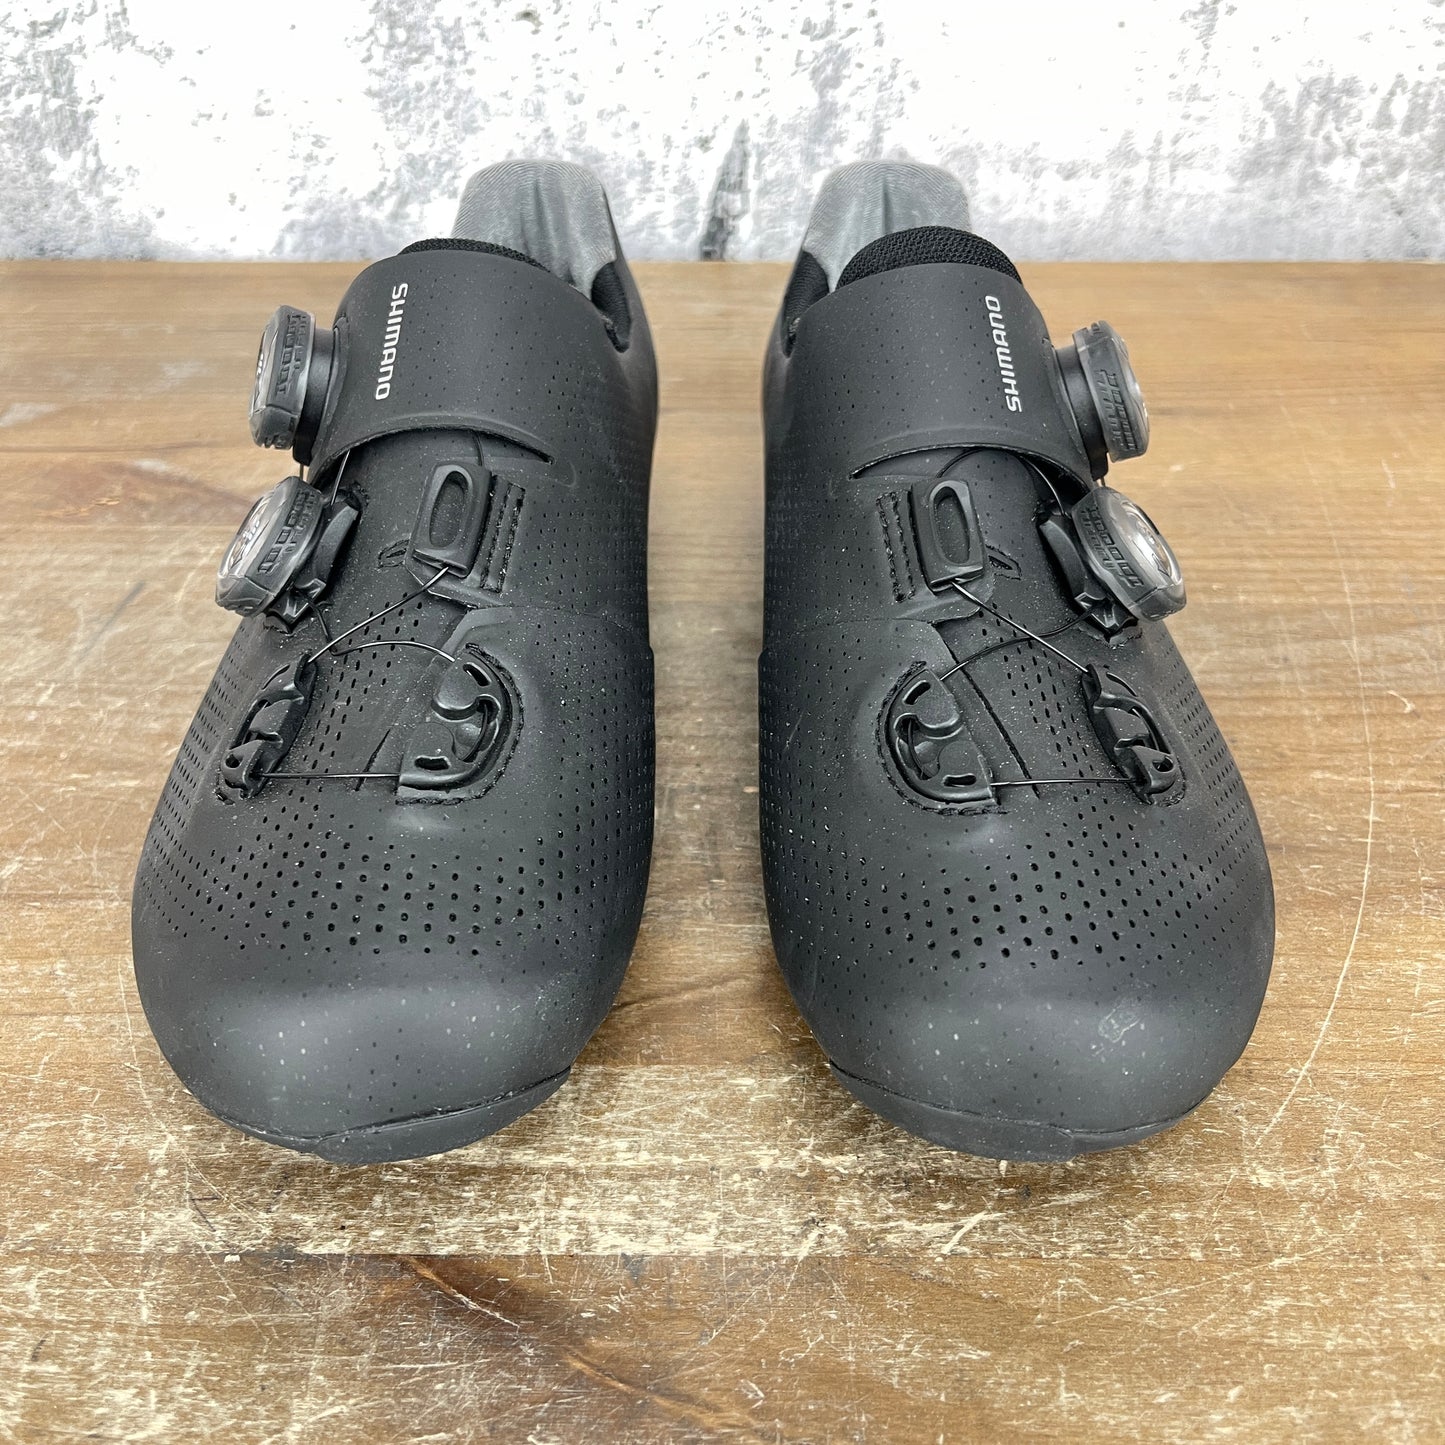 Light Use! Shimano SH-RC901 Wide EU 40 US 6.7 Black Cycling Shoes Cleats 485g